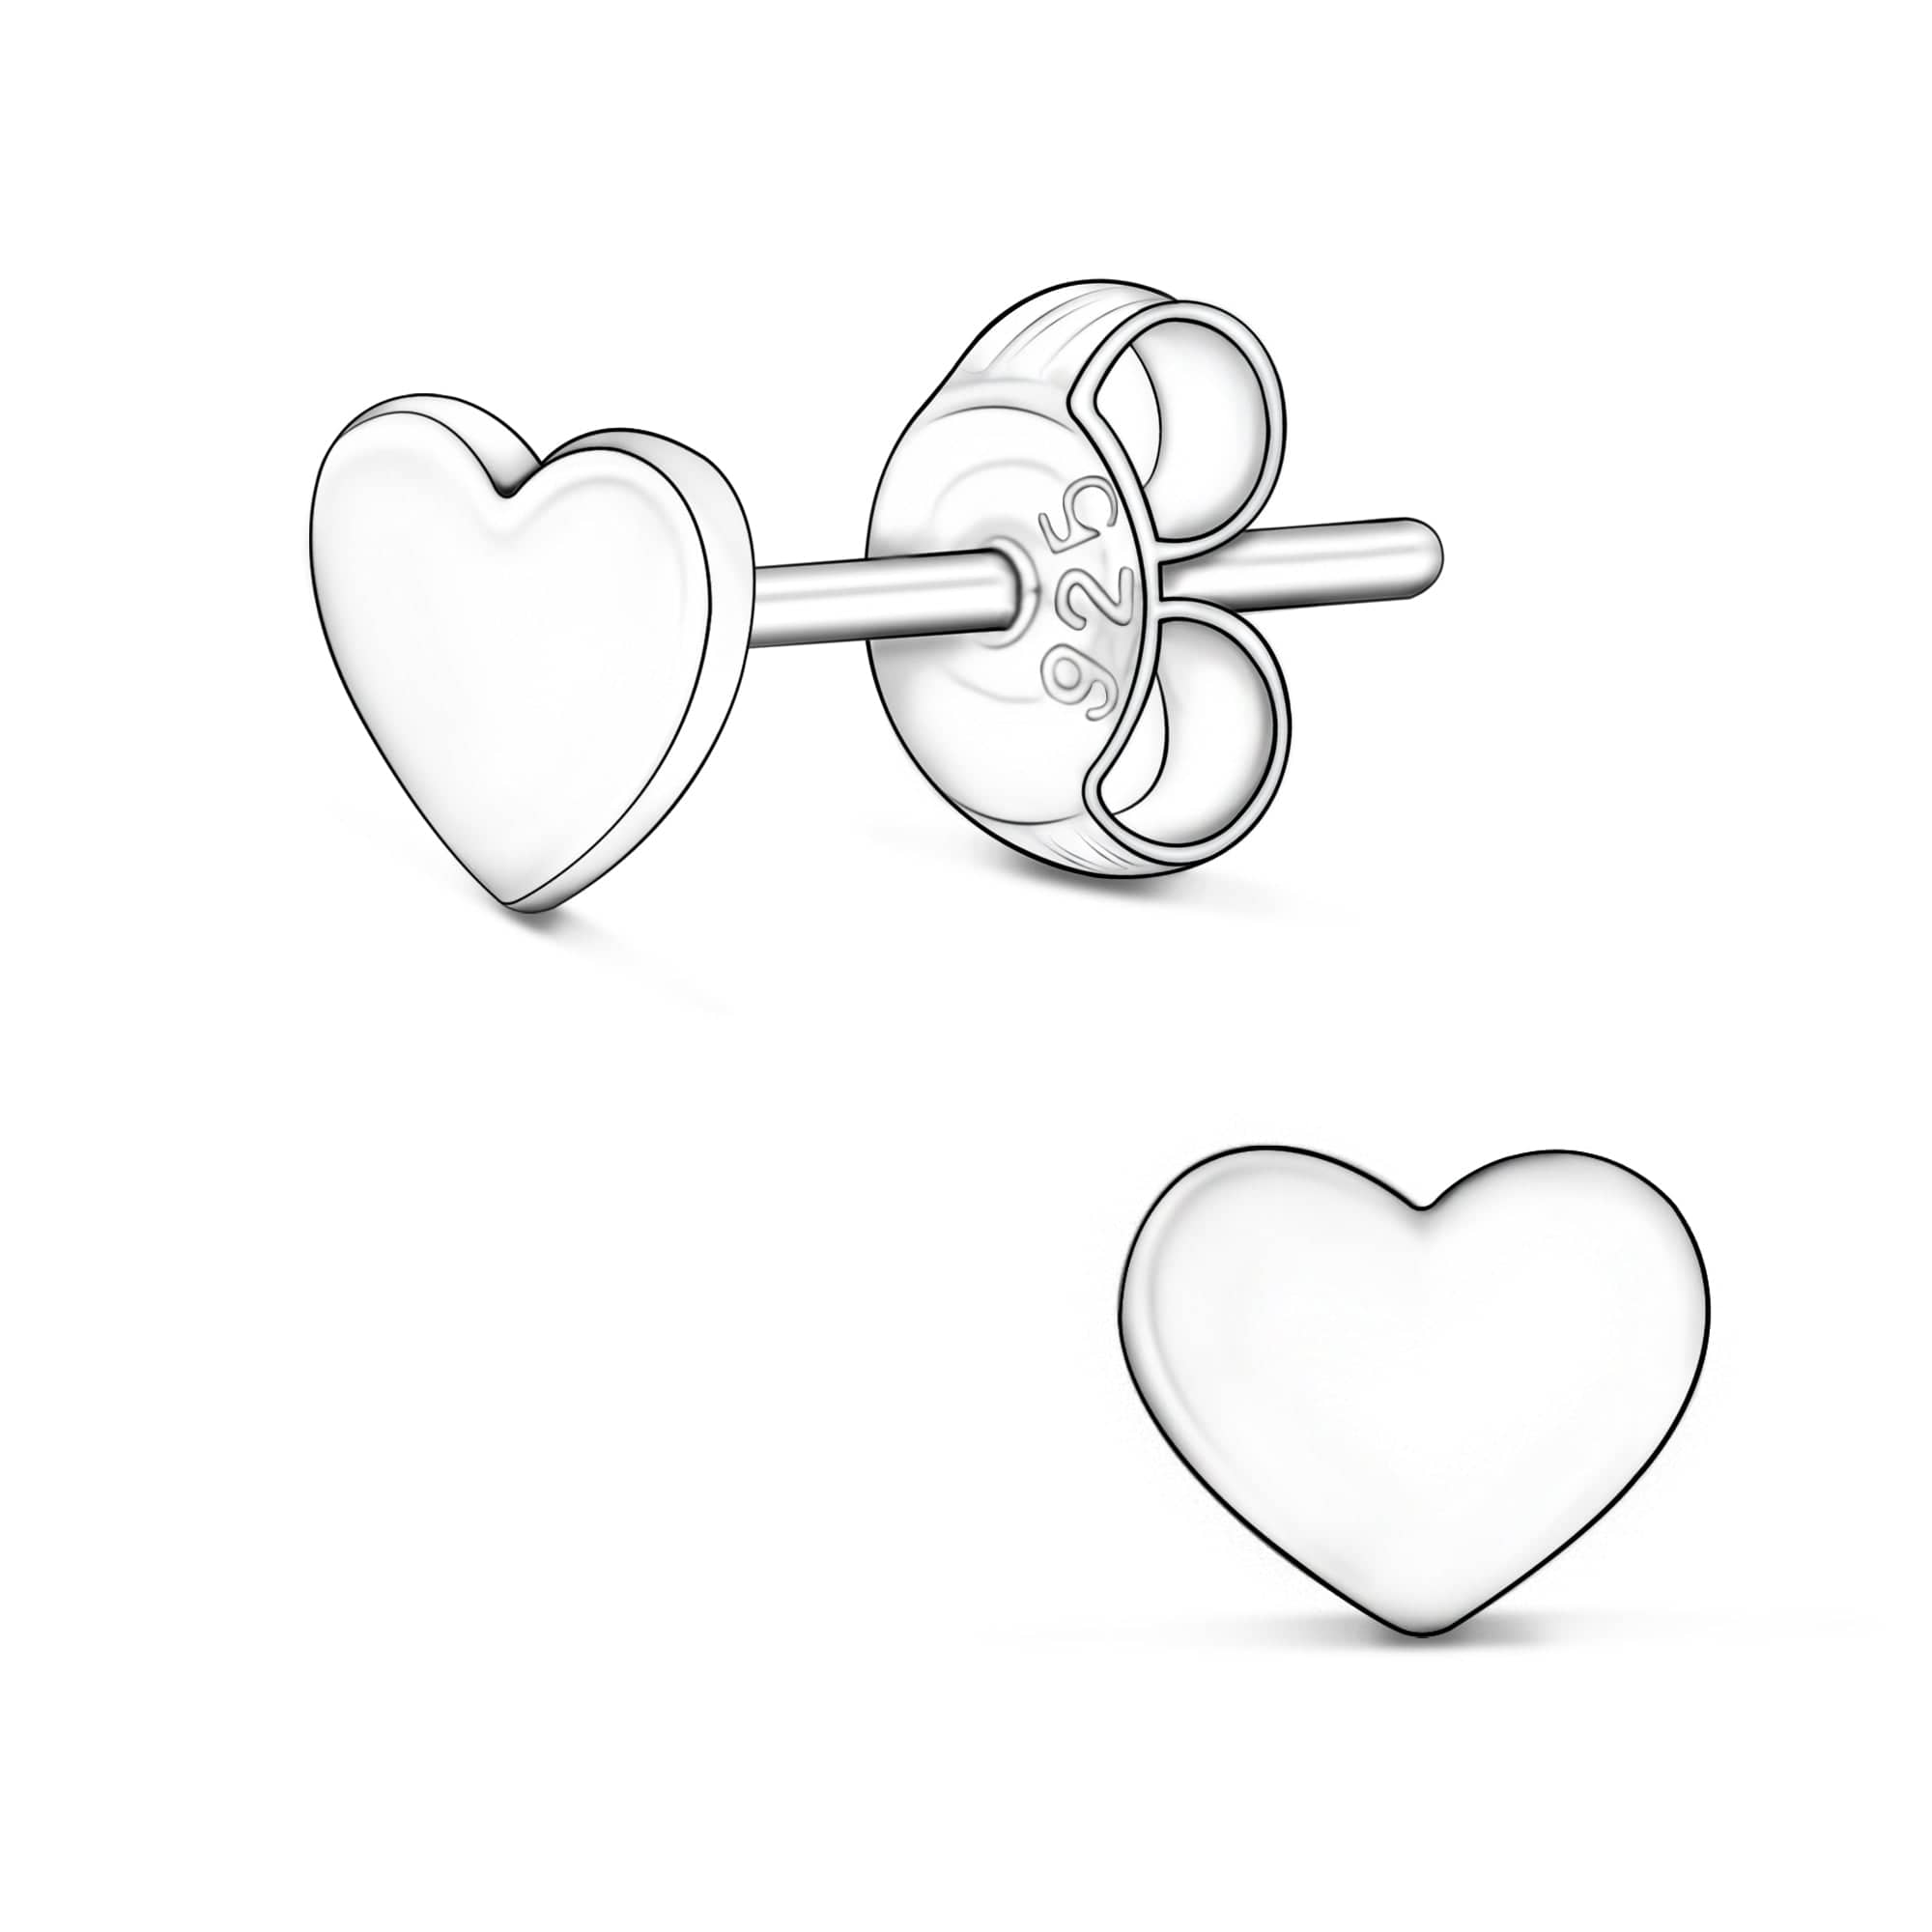 Tiny Heart Stud Earrings Sterling Silver Stud Earrings High Polished